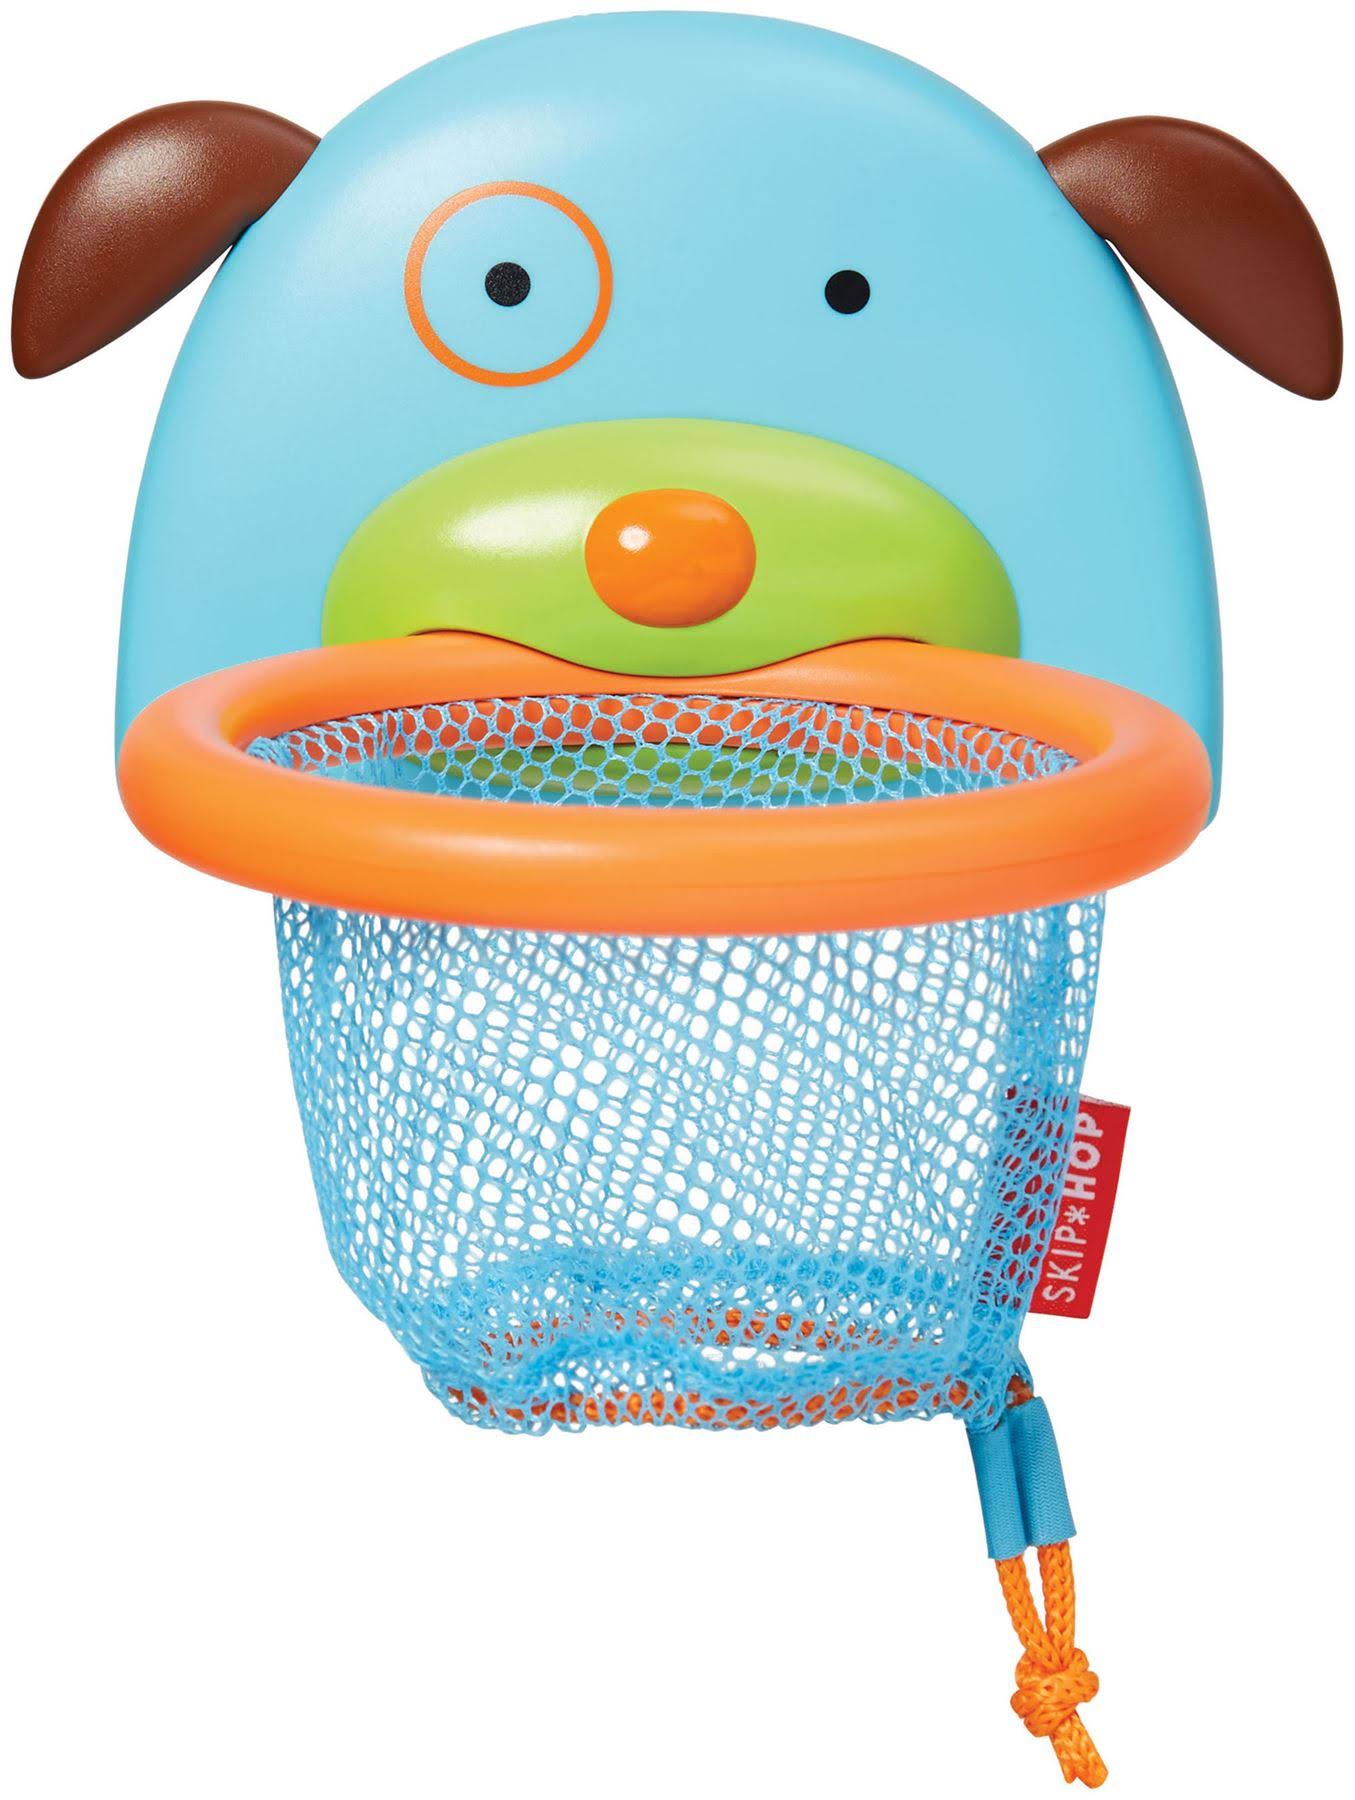 Skip Hop SH235357 Zoo Bathtime Basketball Toy - Bath Dog, Blue